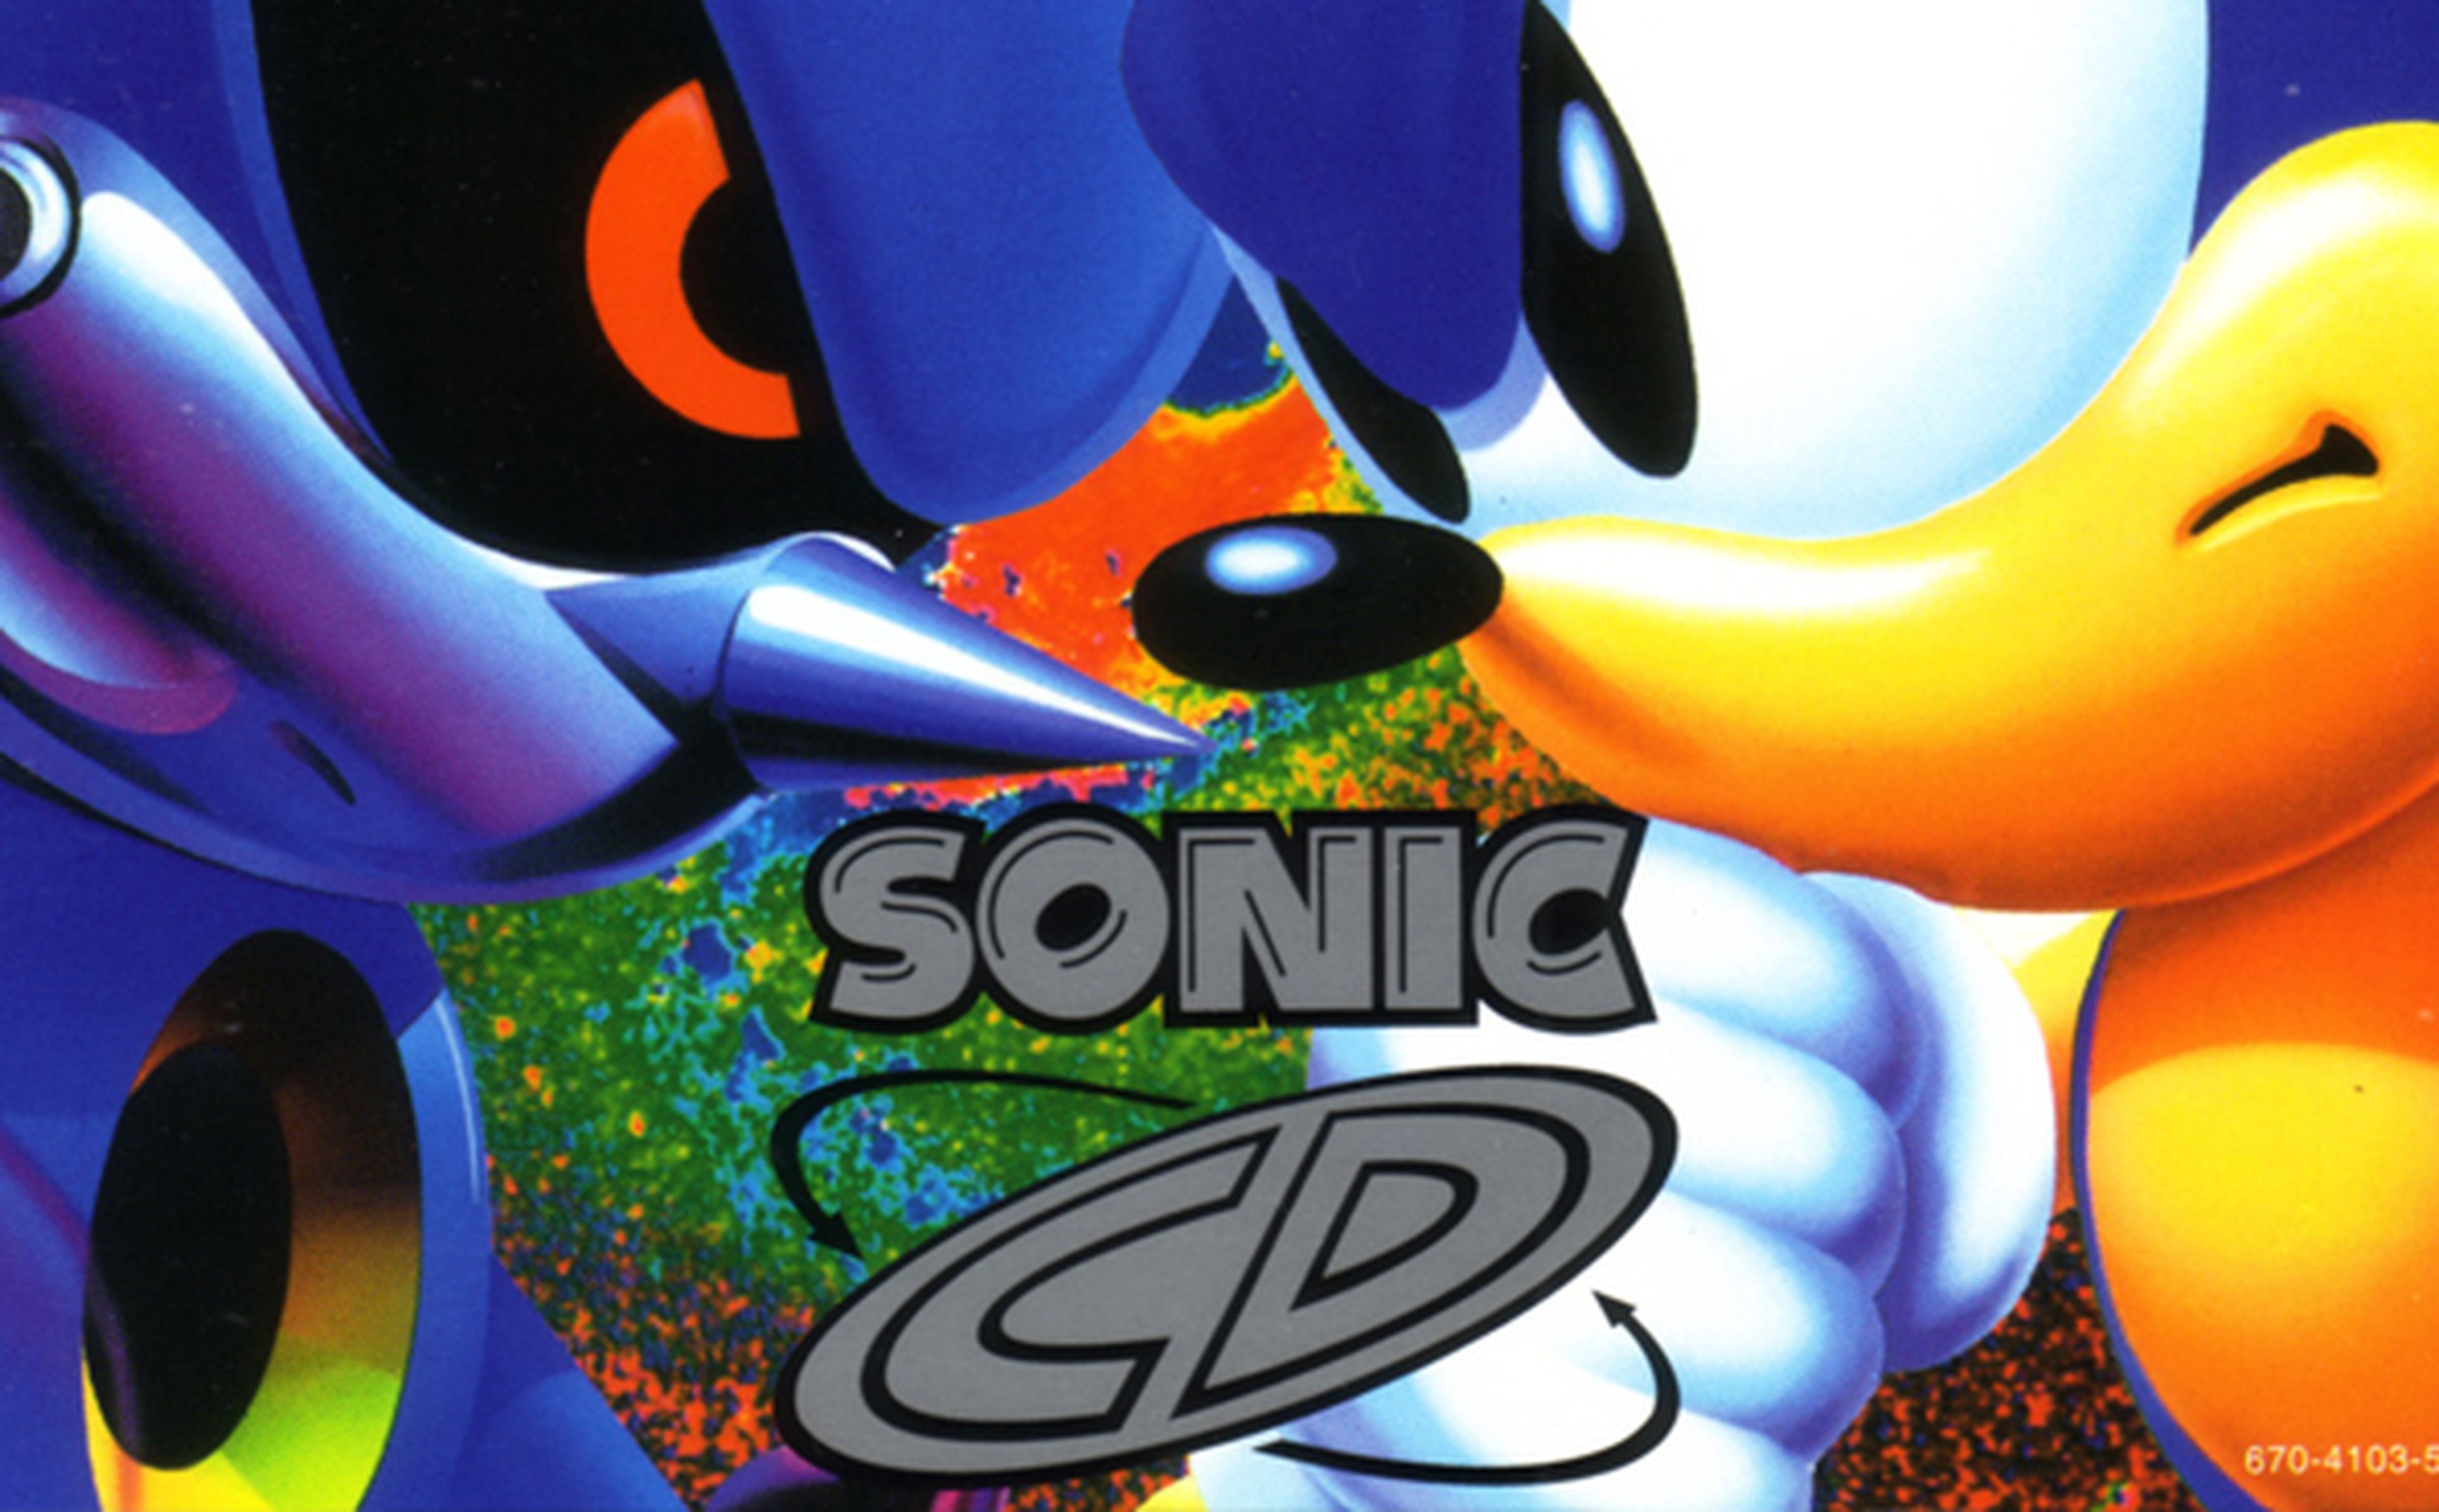 Sonic CD entra en Xbox LIVE